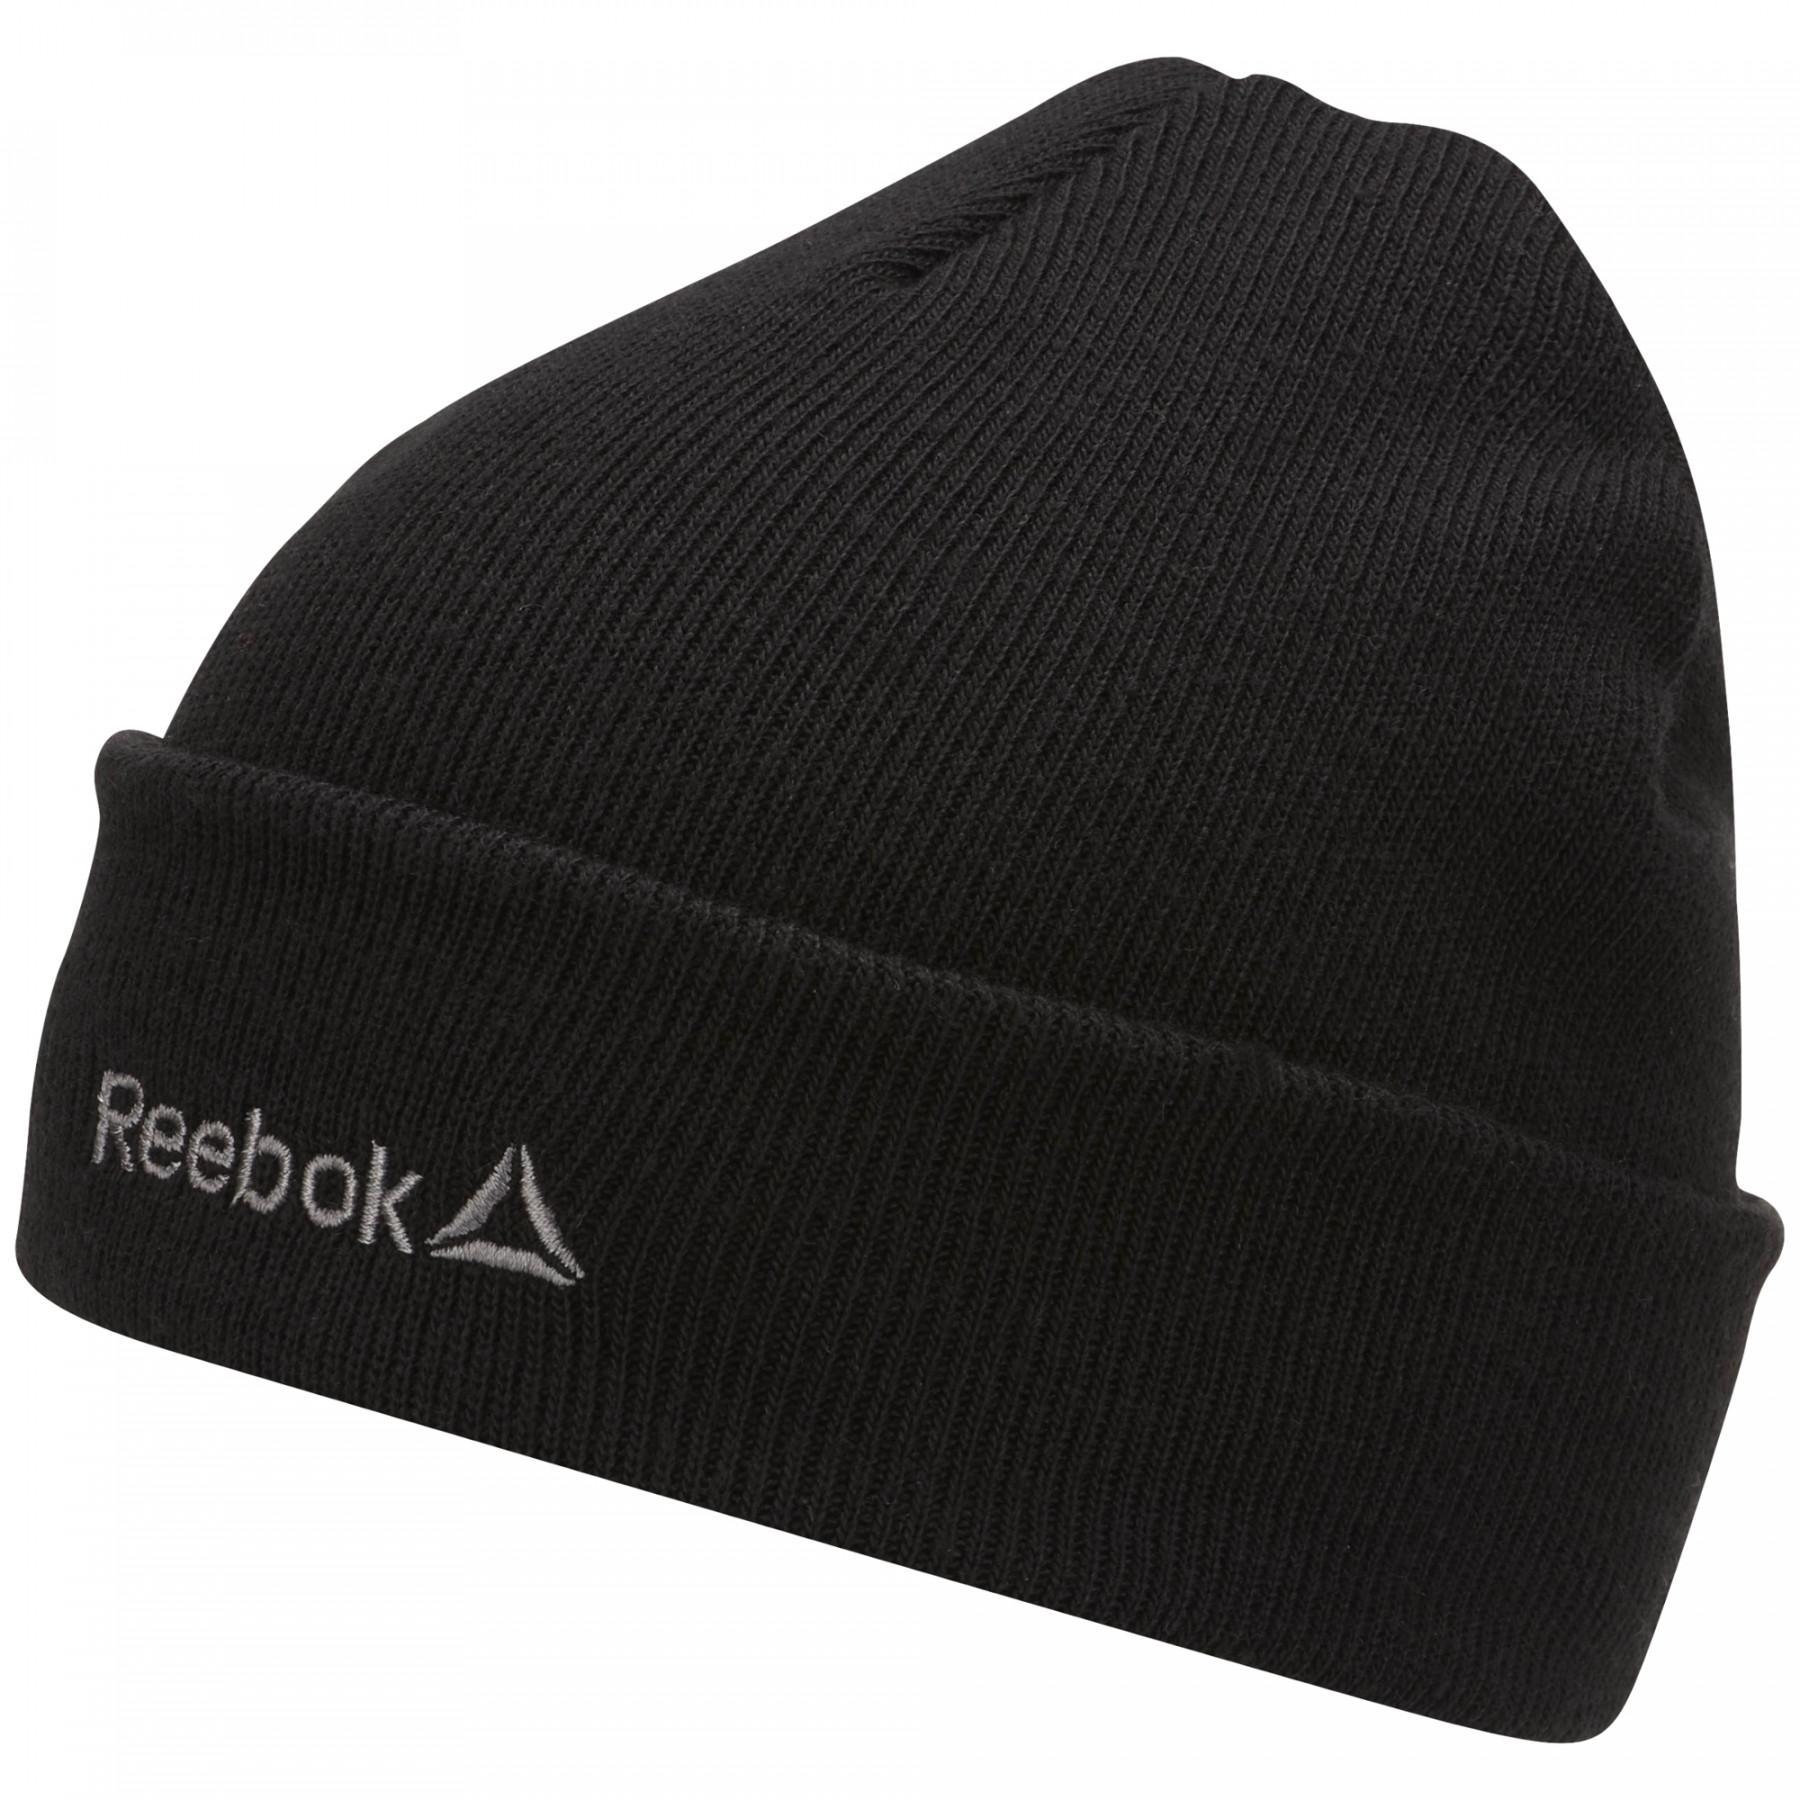 Cap Reebok logo